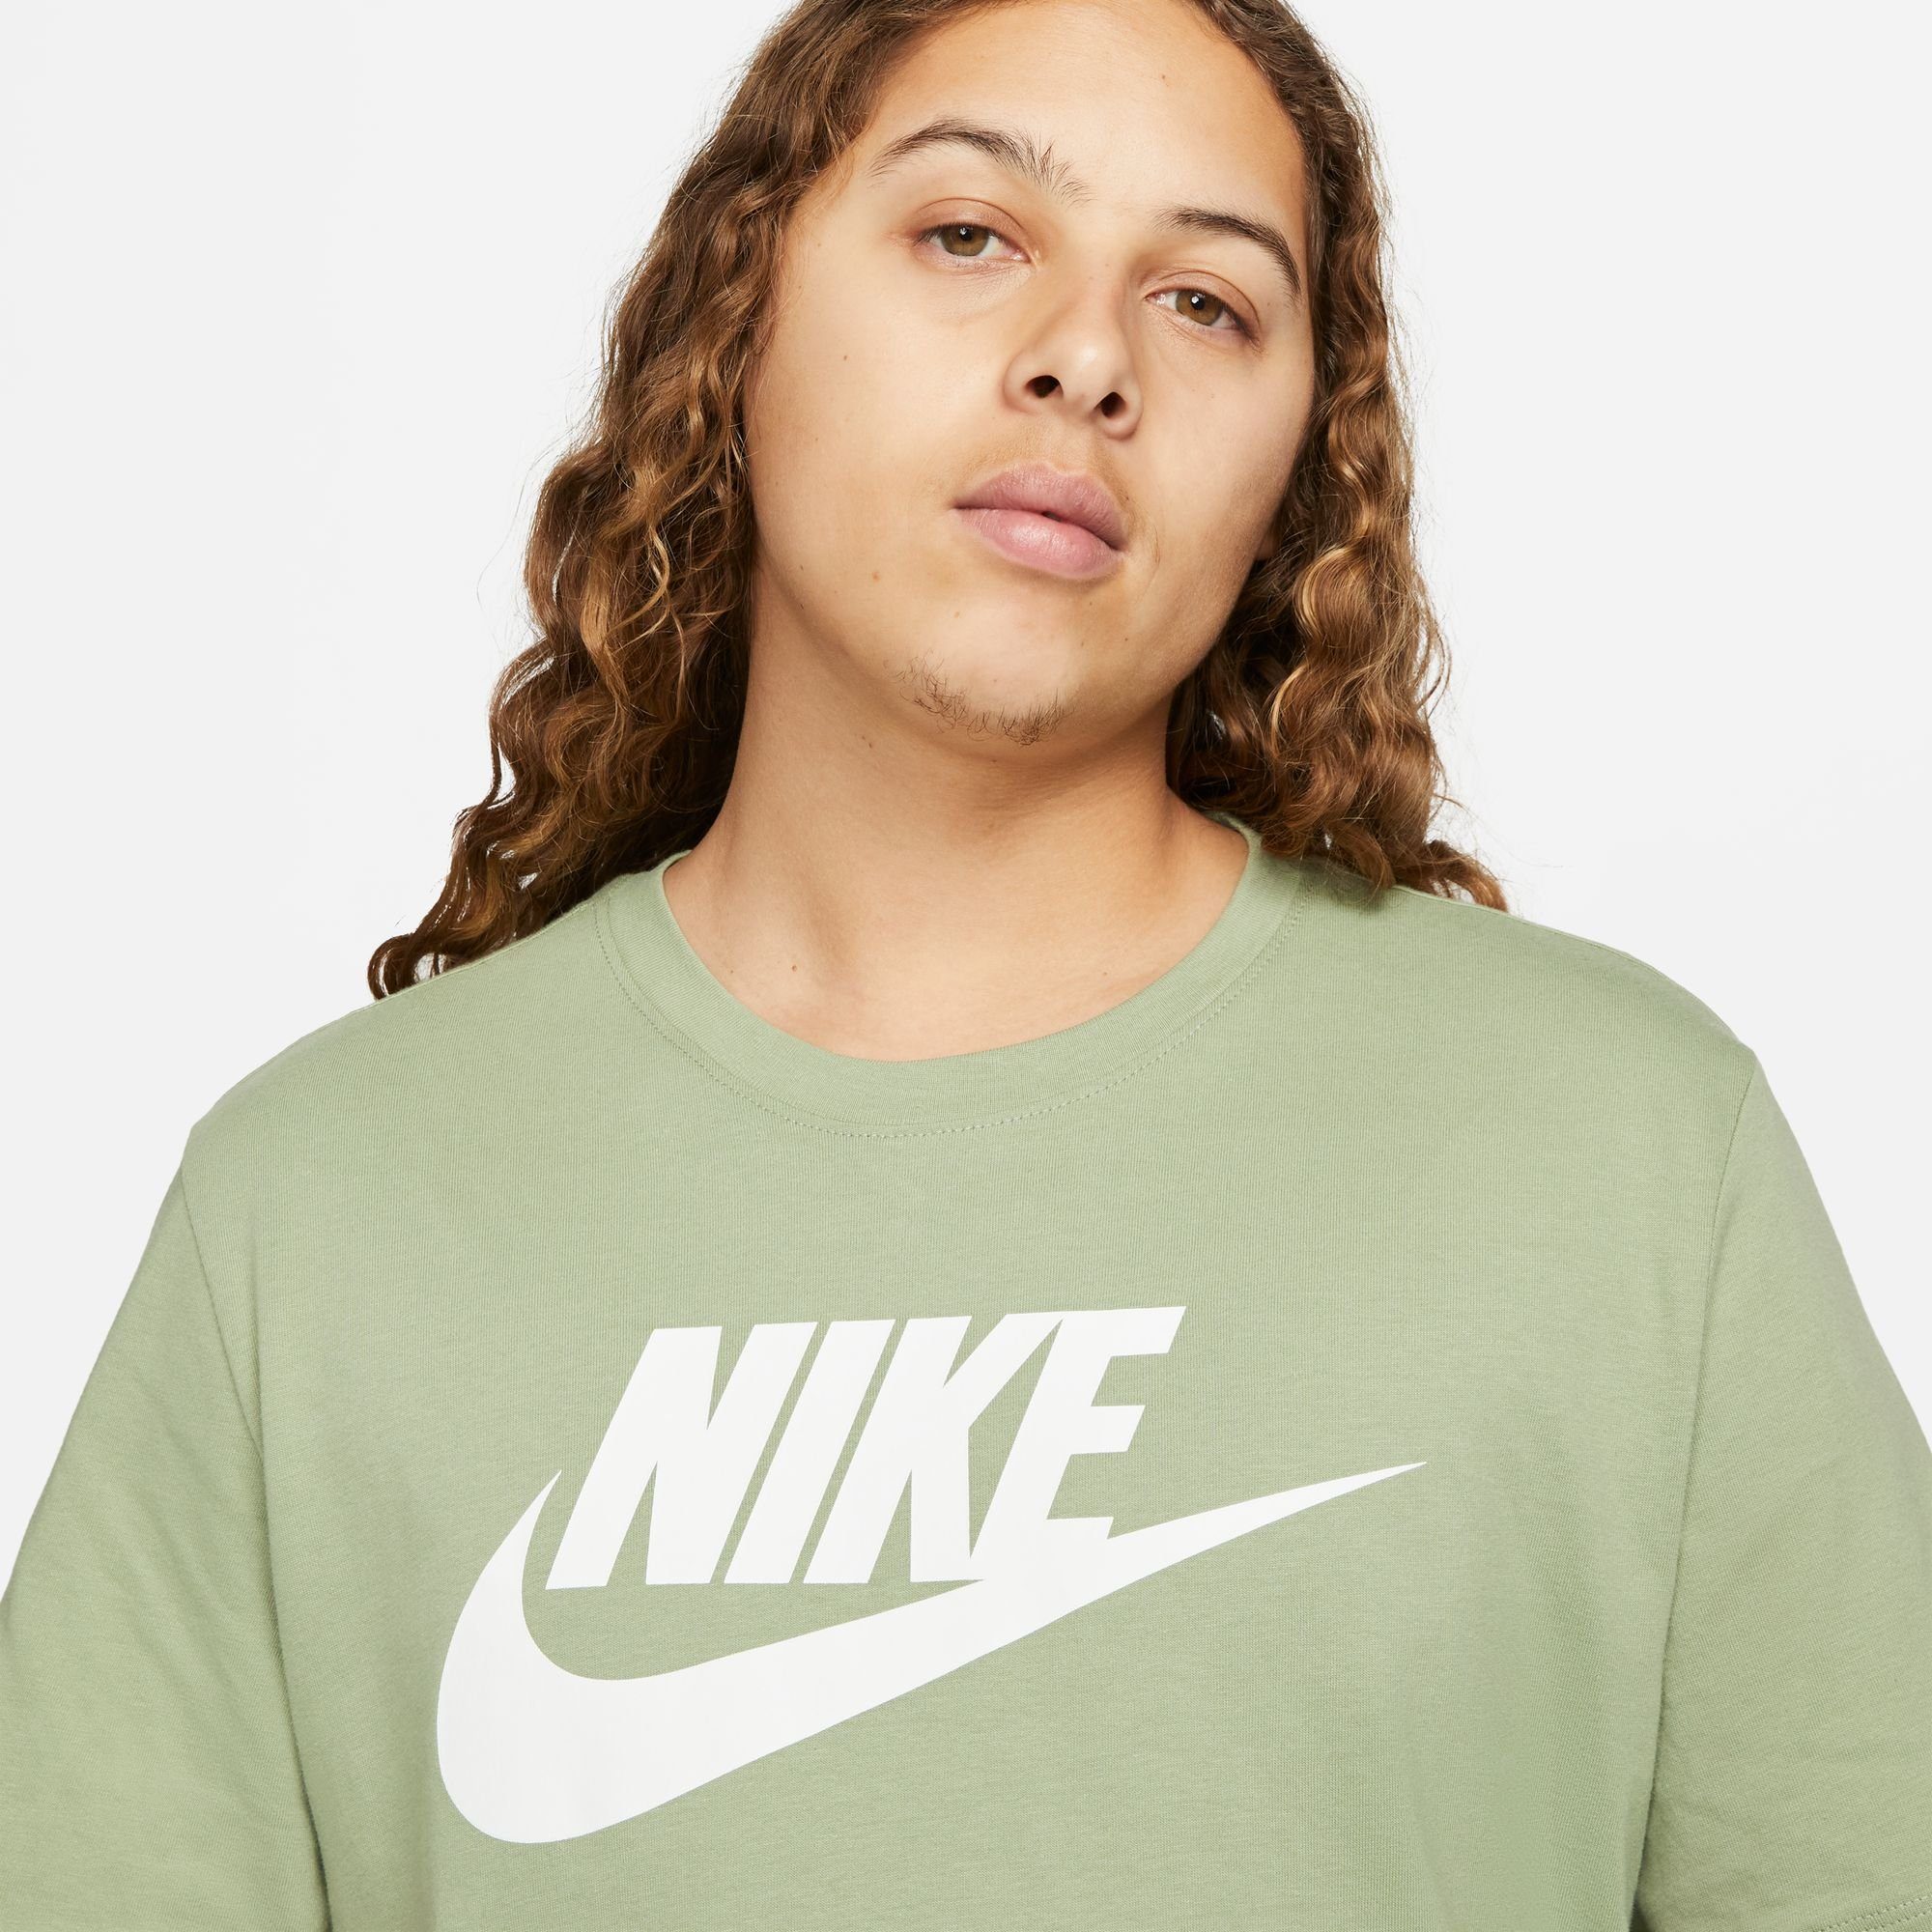 Nike Sportswear T-Shirt T-SHIRT grün MEN'S